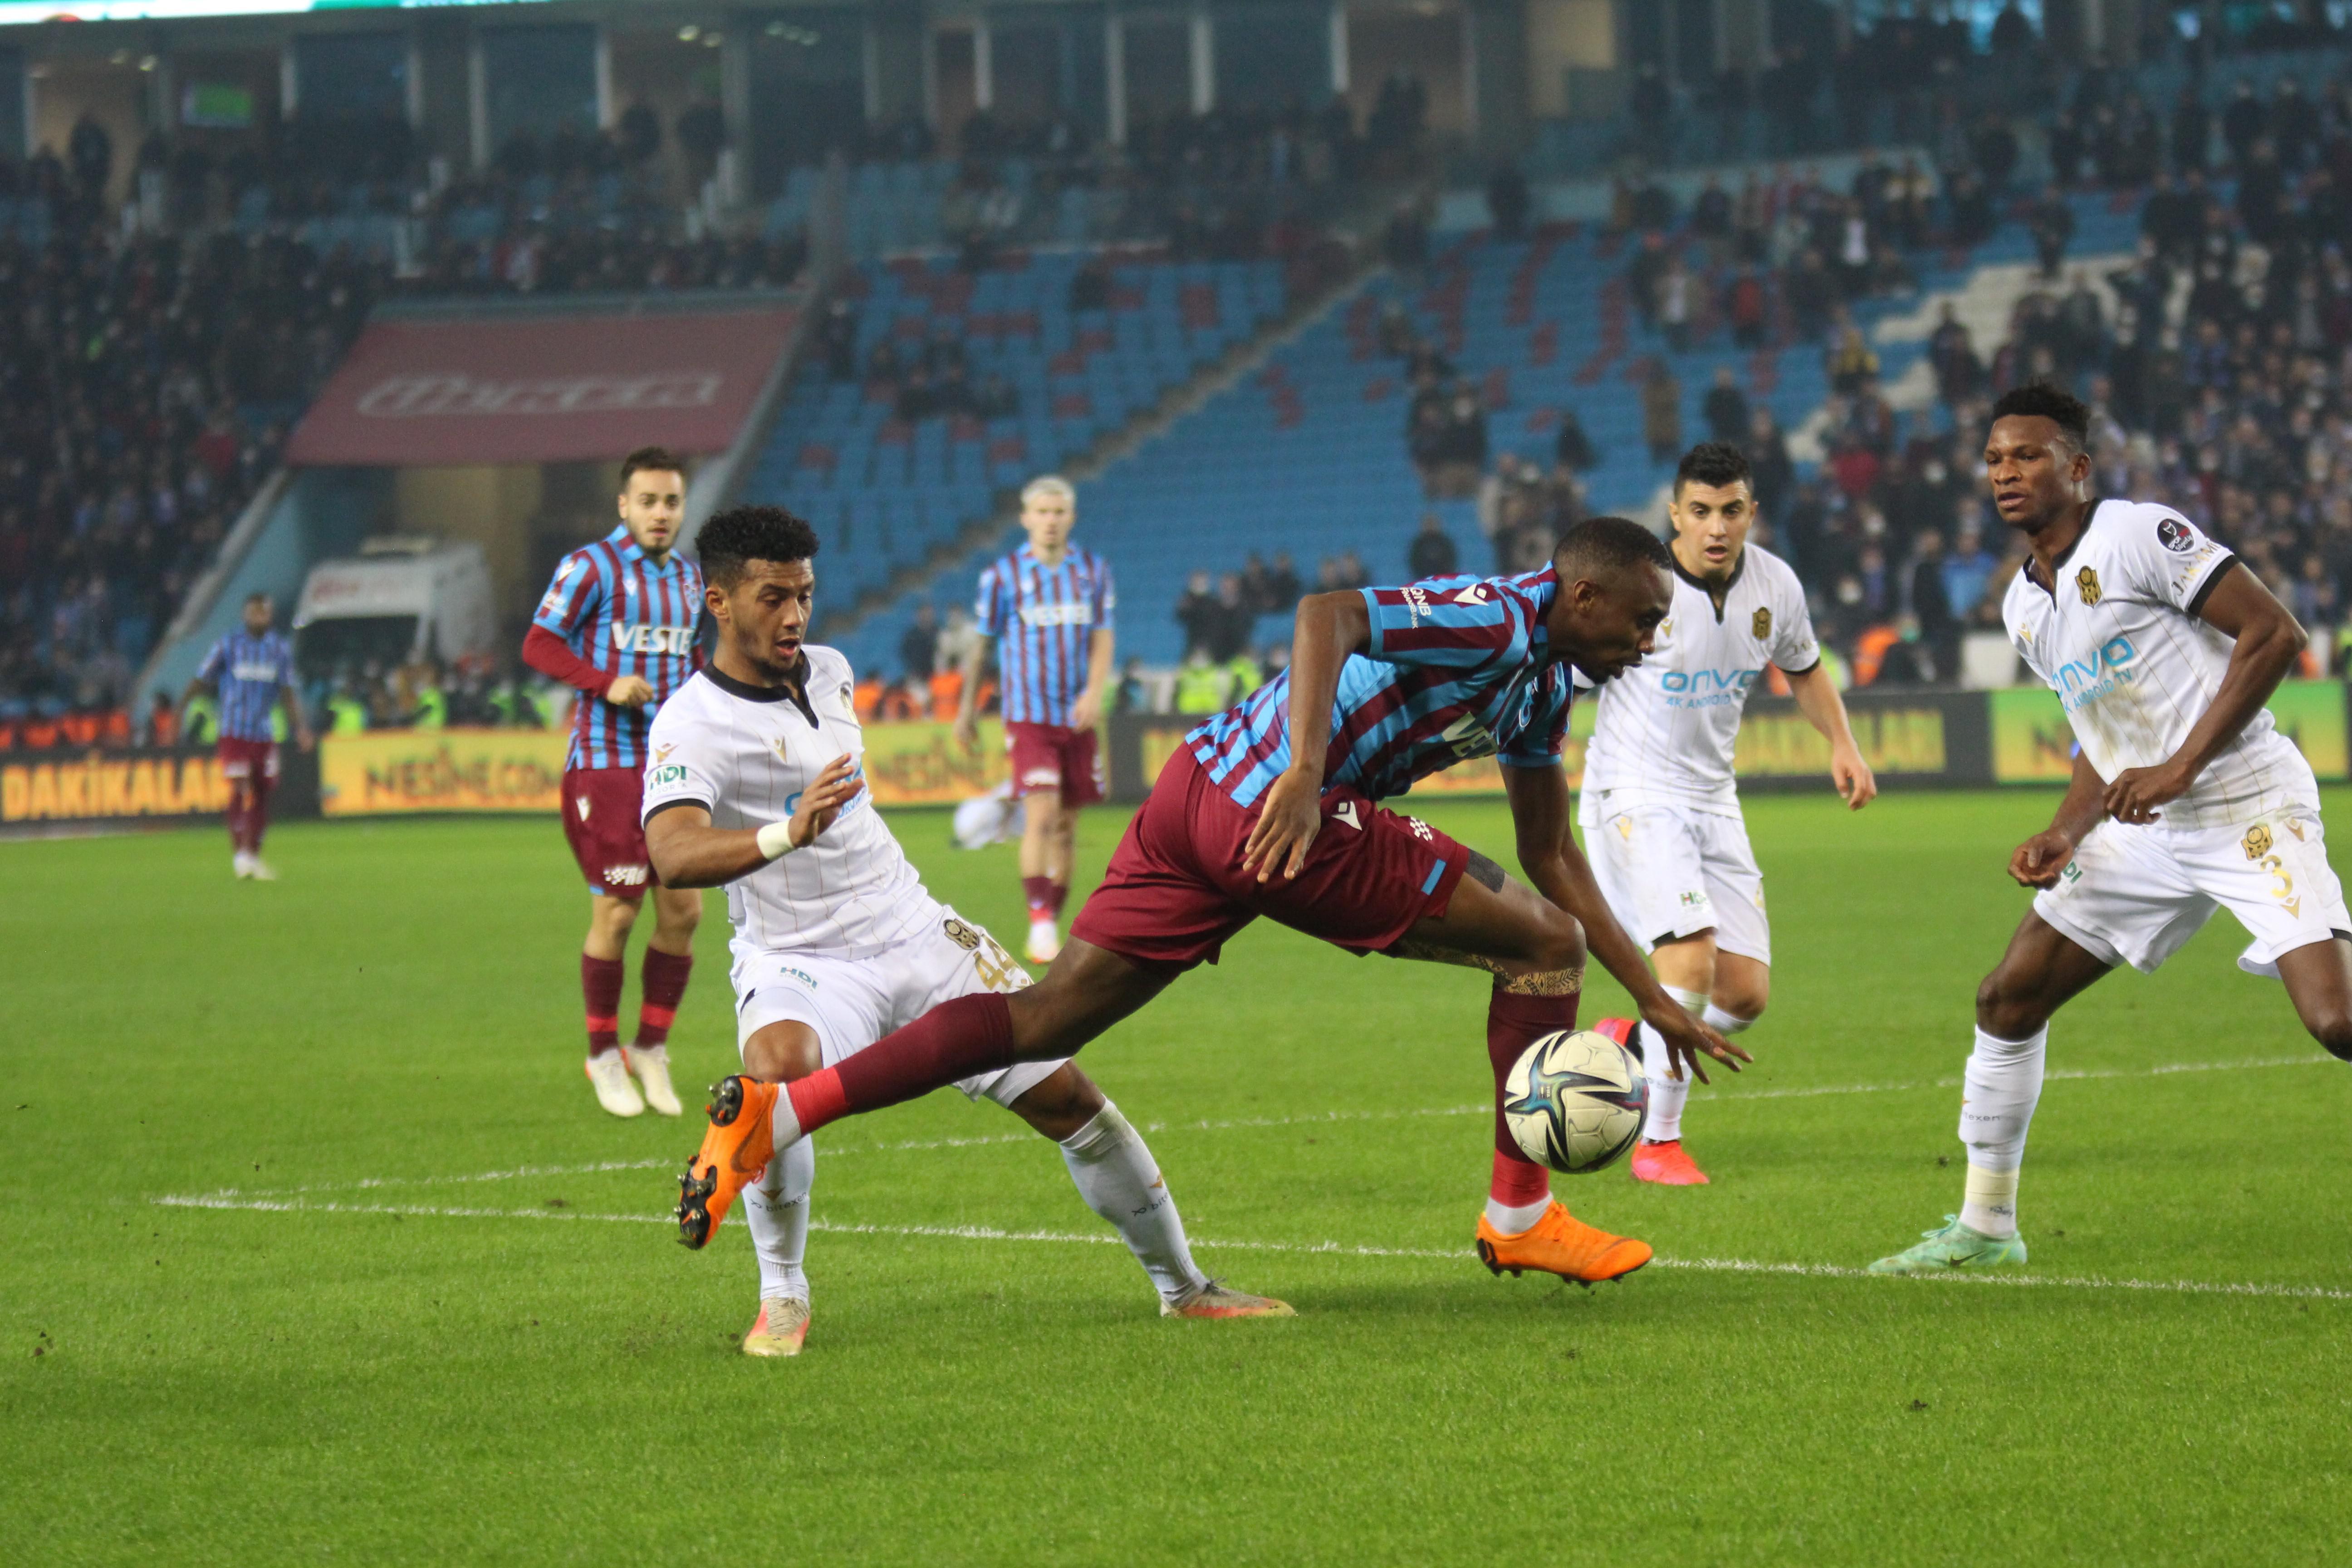 ÖZET) Trabzonspor - Yeni Malatyaspor maç sonucu: 1-0 - Trabzonspor (TS)  Haberleri - Spor